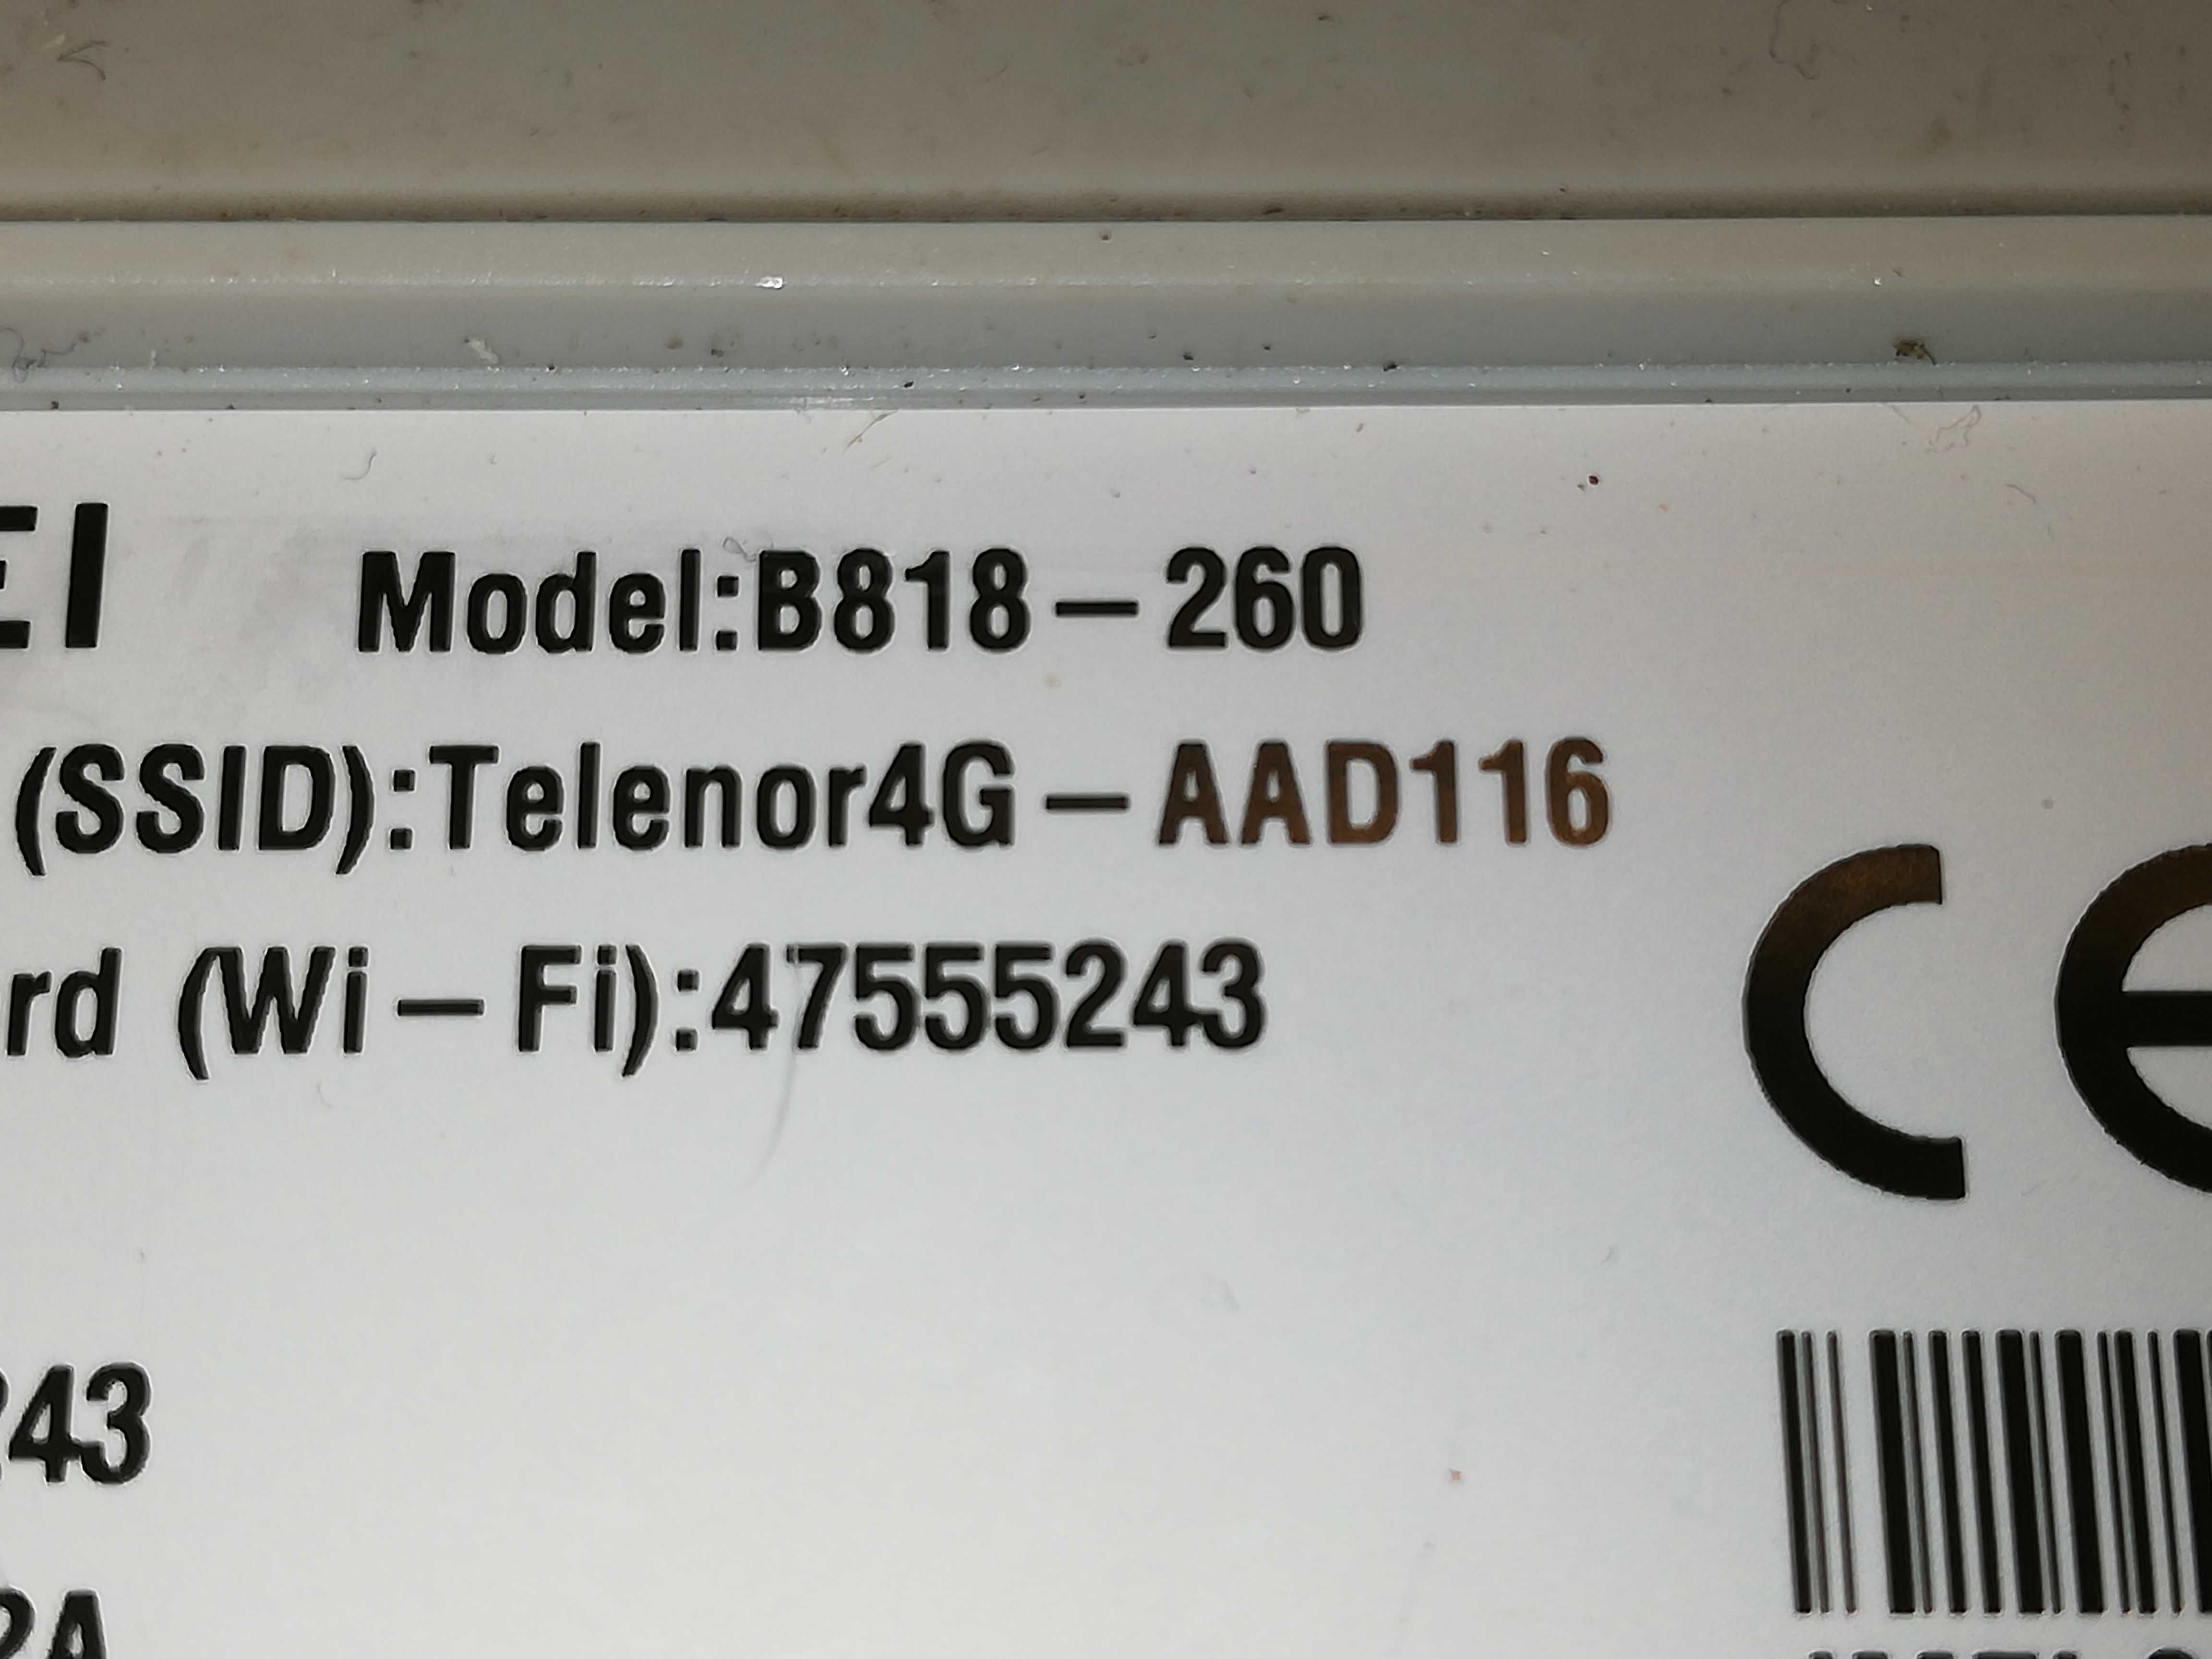 Router modem SIM 4G LTE Huawei Prime 3 B818 260 Cat19 Gigabit CPE